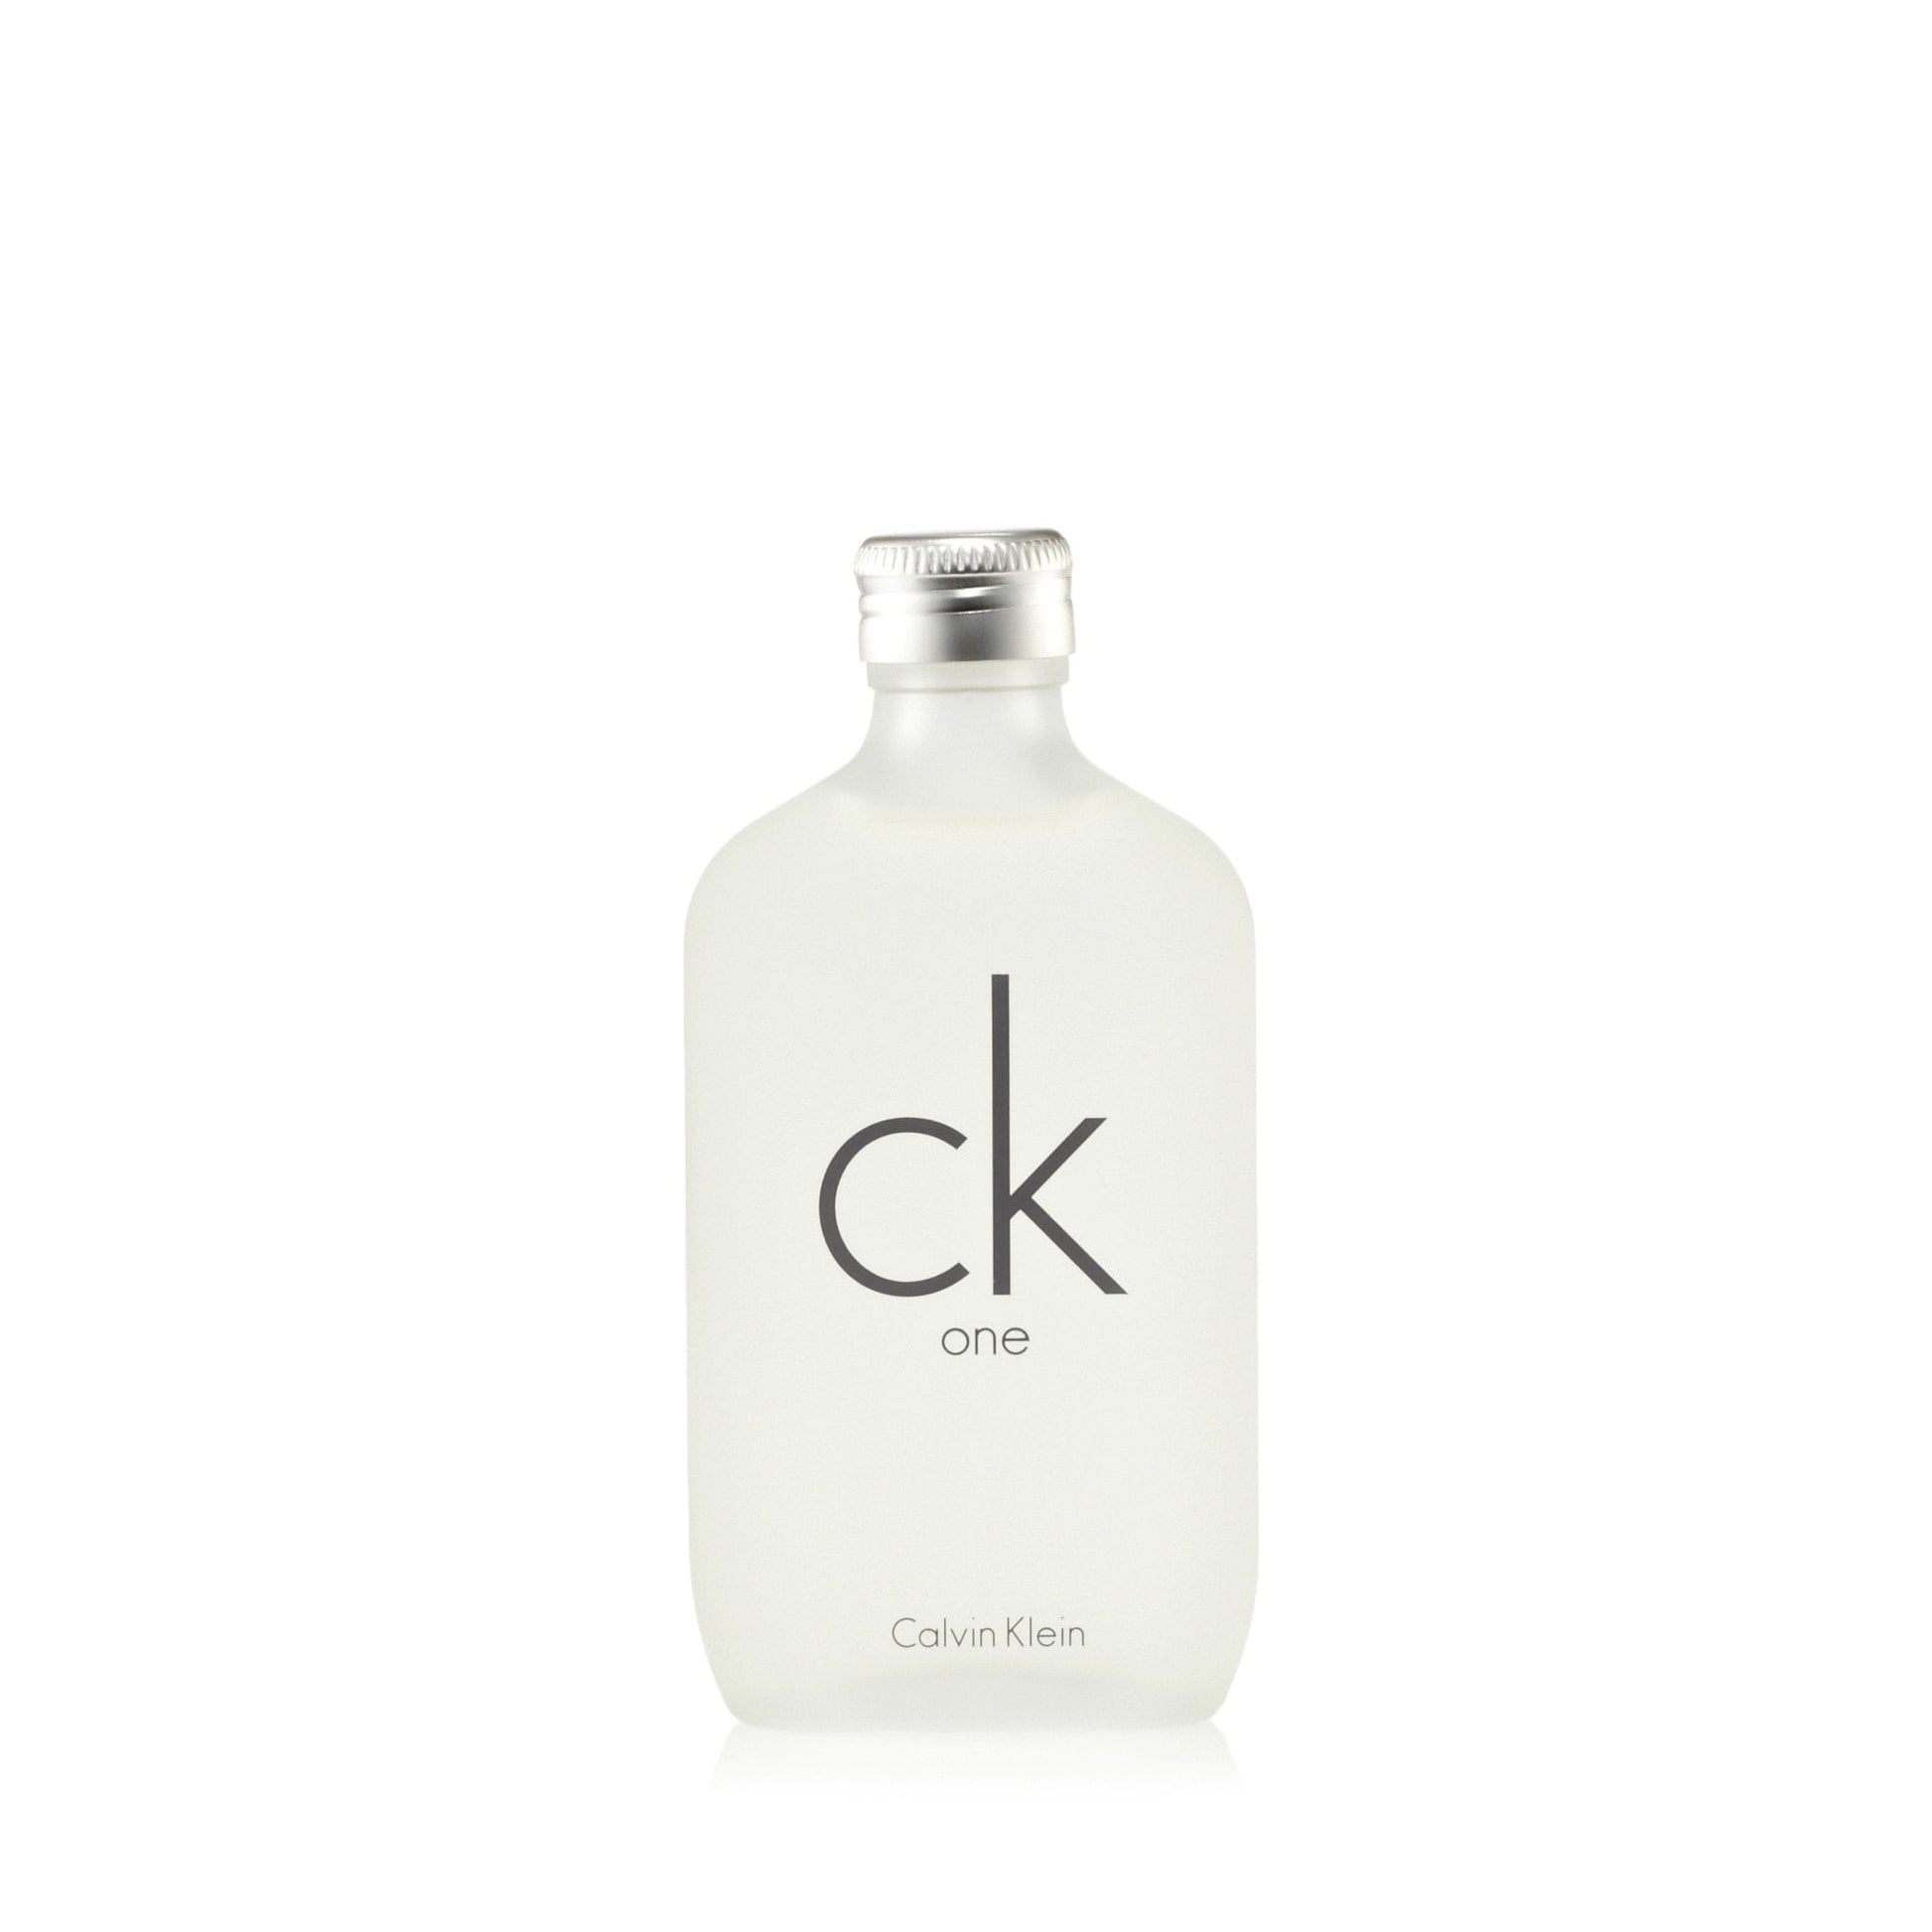 CK One Eau de Toilette Spray for Women and Men by Calvin Klein, Product image 4